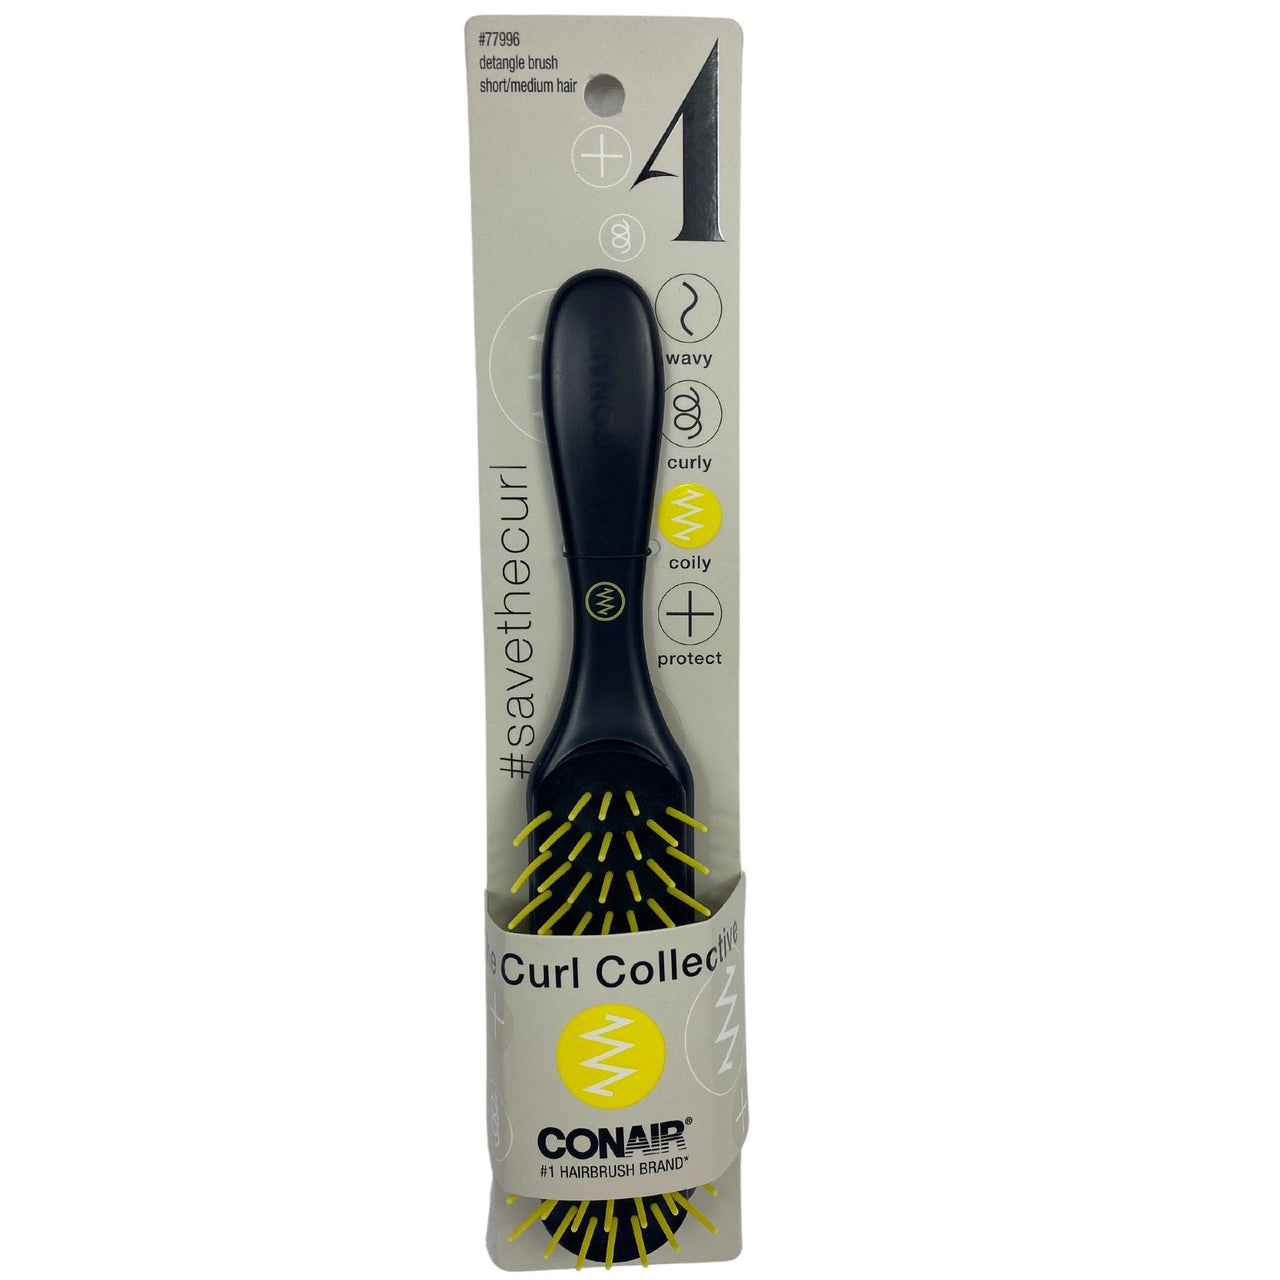 Conair The Curl Collective Detangle Brush Short/Medium Hair (72 Pcs Lot) - Discount Wholesalers Inc